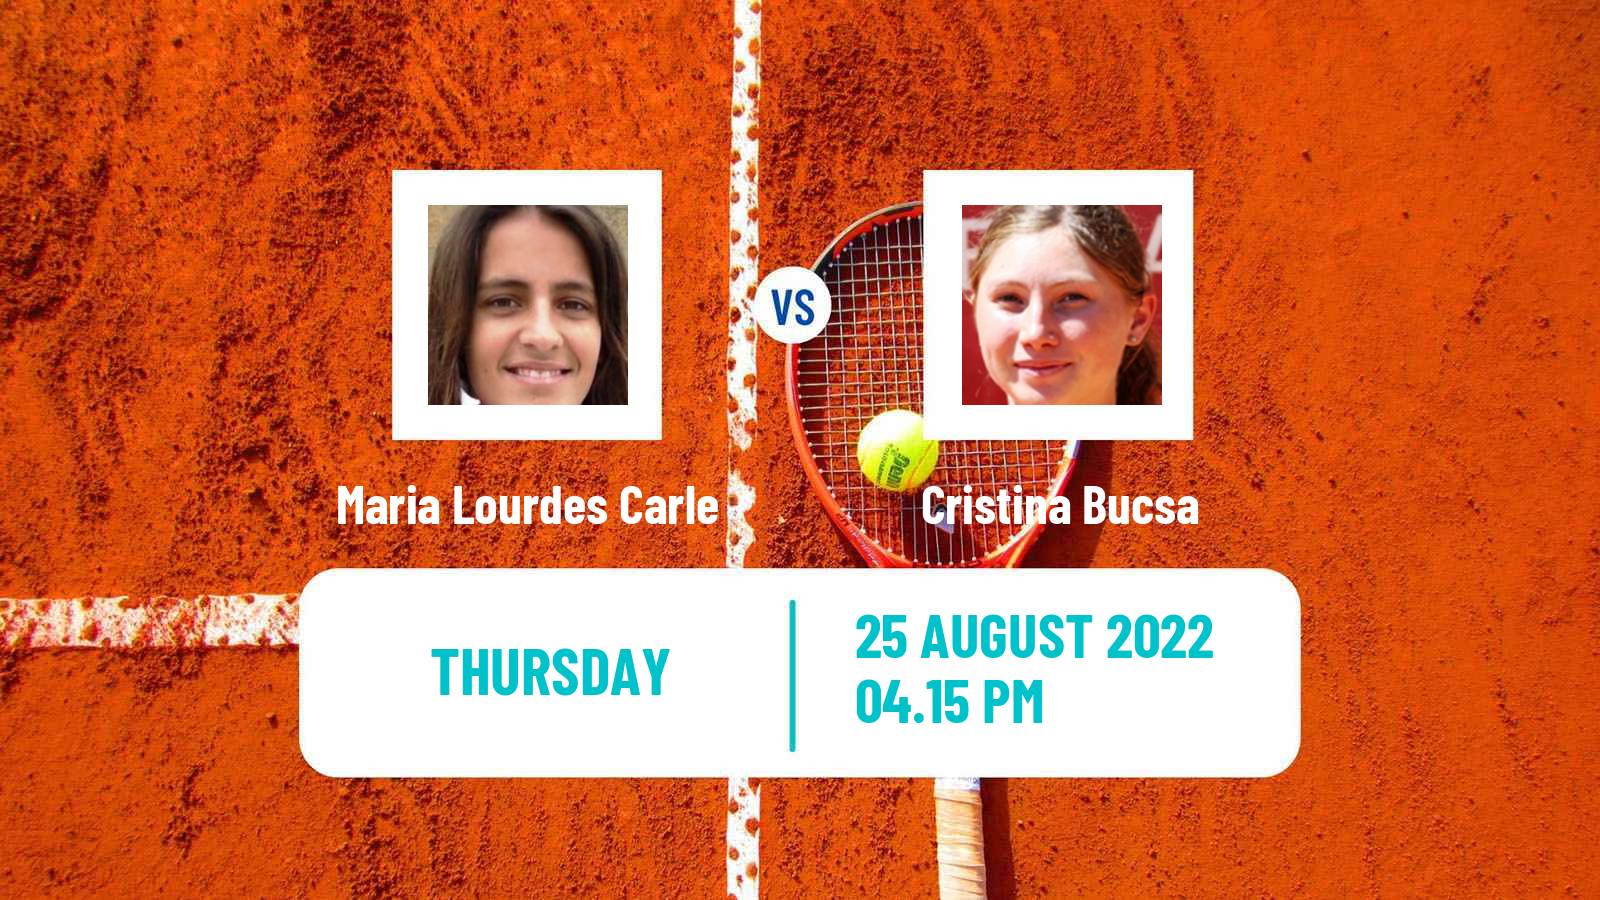 Tennis WTA US Open Maria Lourdes Carle - Cristina Bucsa